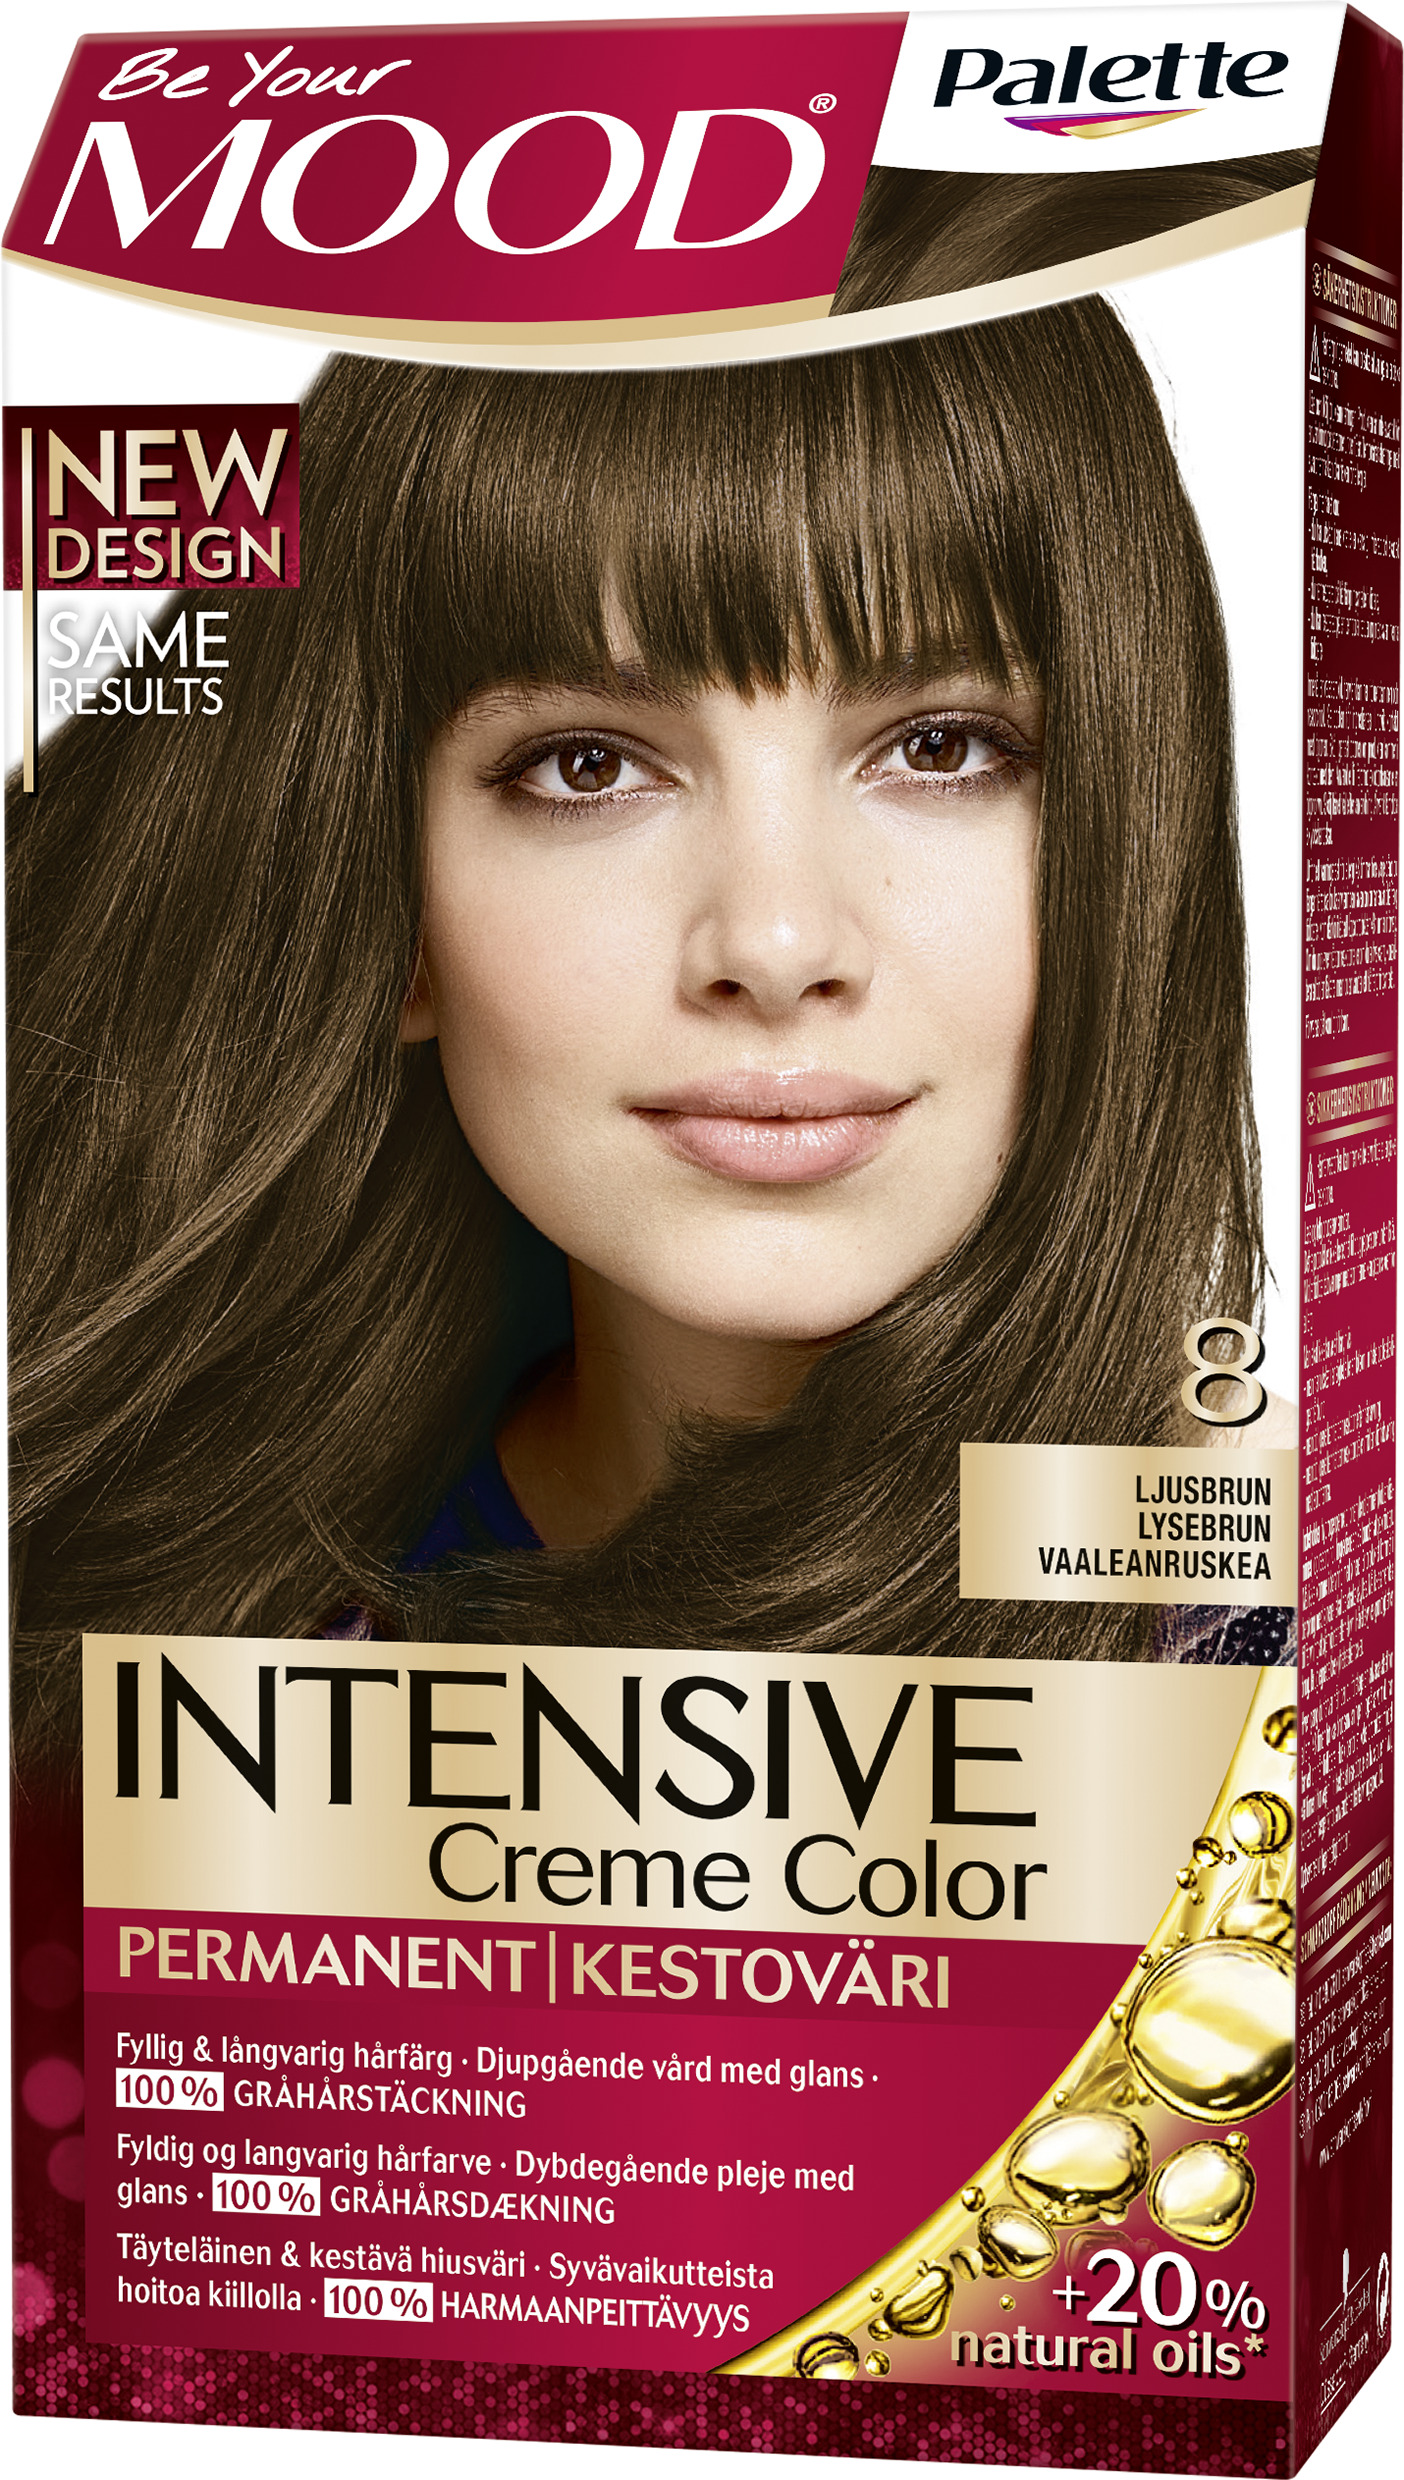 MOOD Palette Intensive Creme Color 8 Ljusbrun